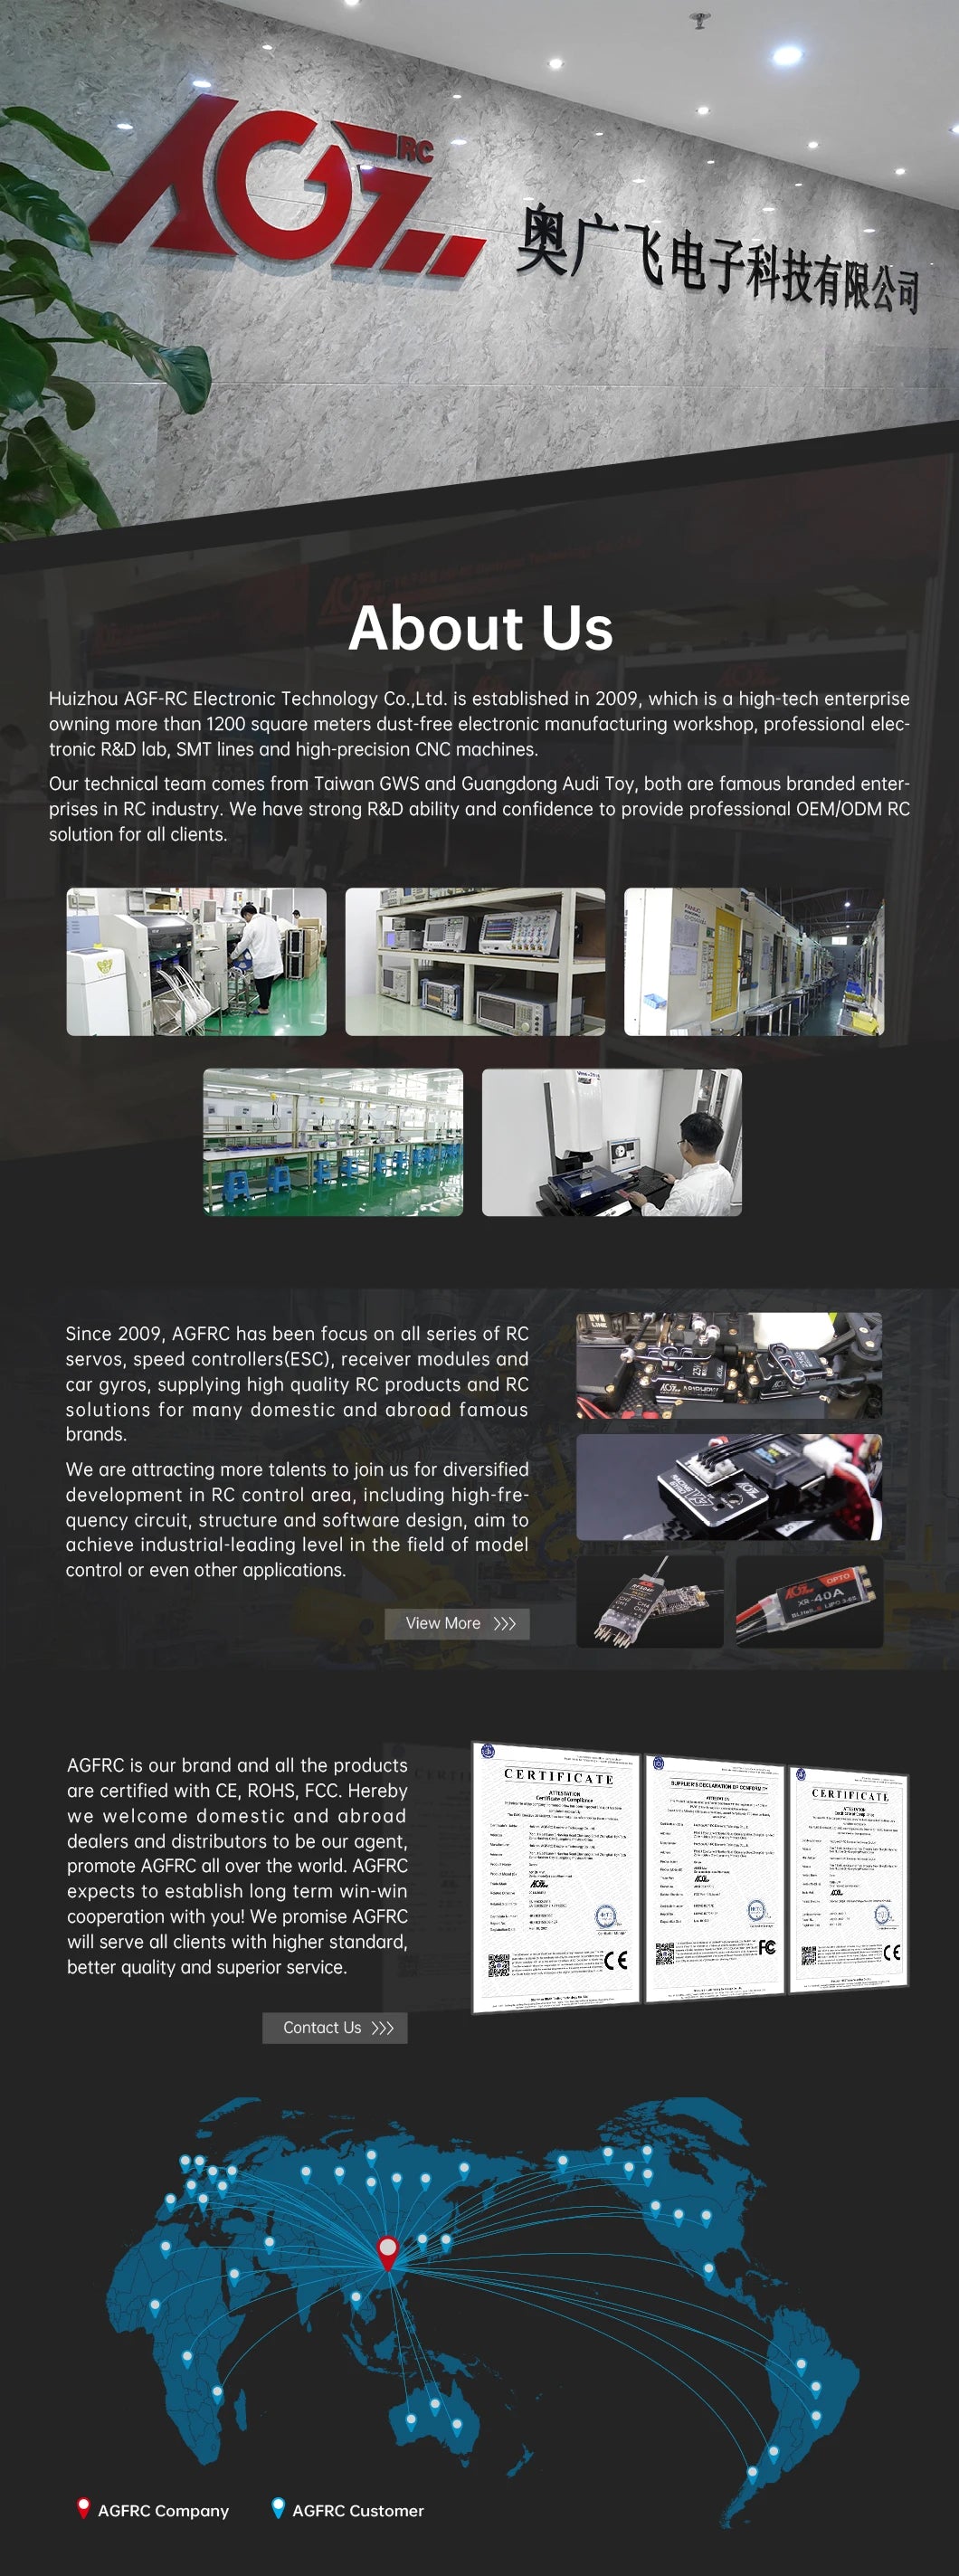 AGFRC A80BHX-H, Huizhou AGF-RC Electronic Technology Co-,Ltd. is a